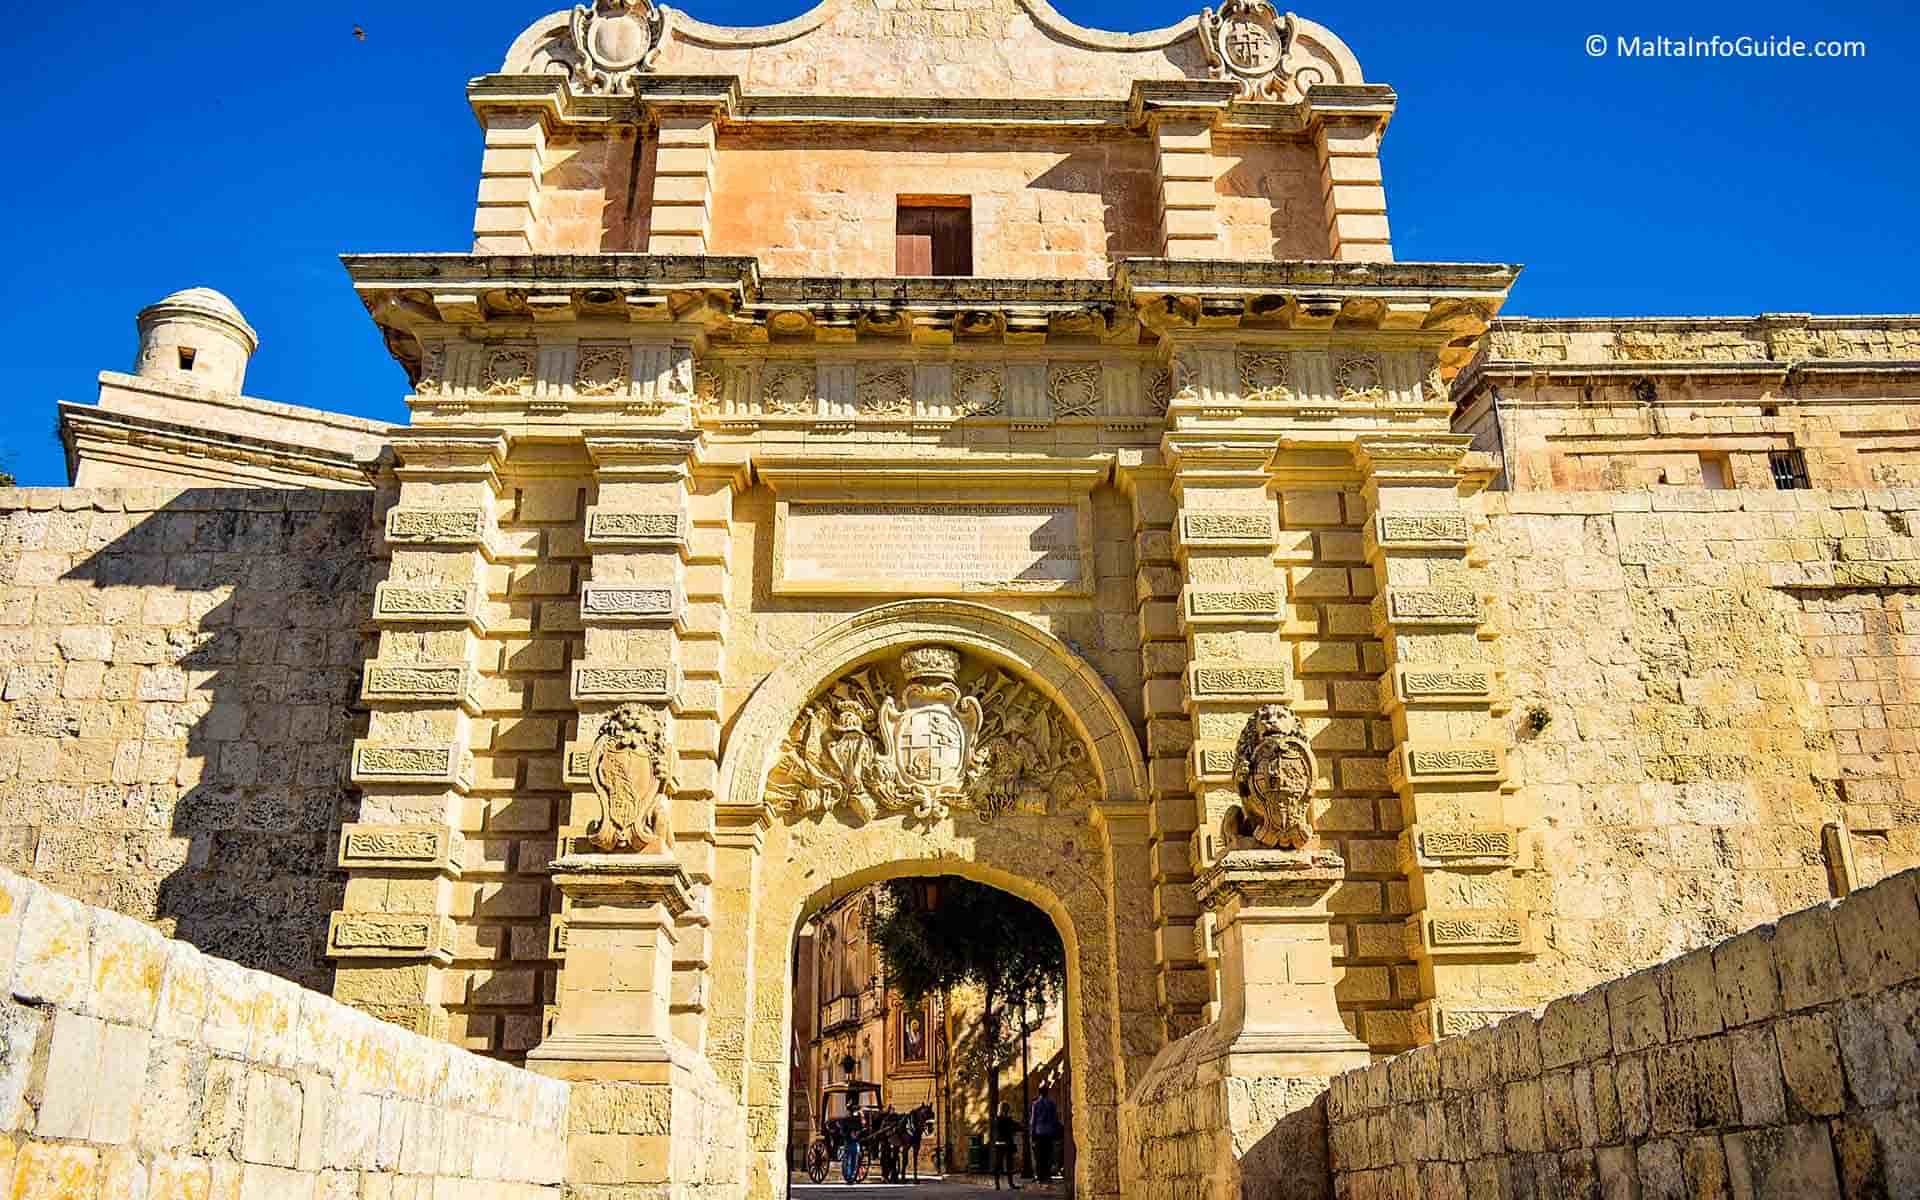 The entrance gate to Mdina in Malta